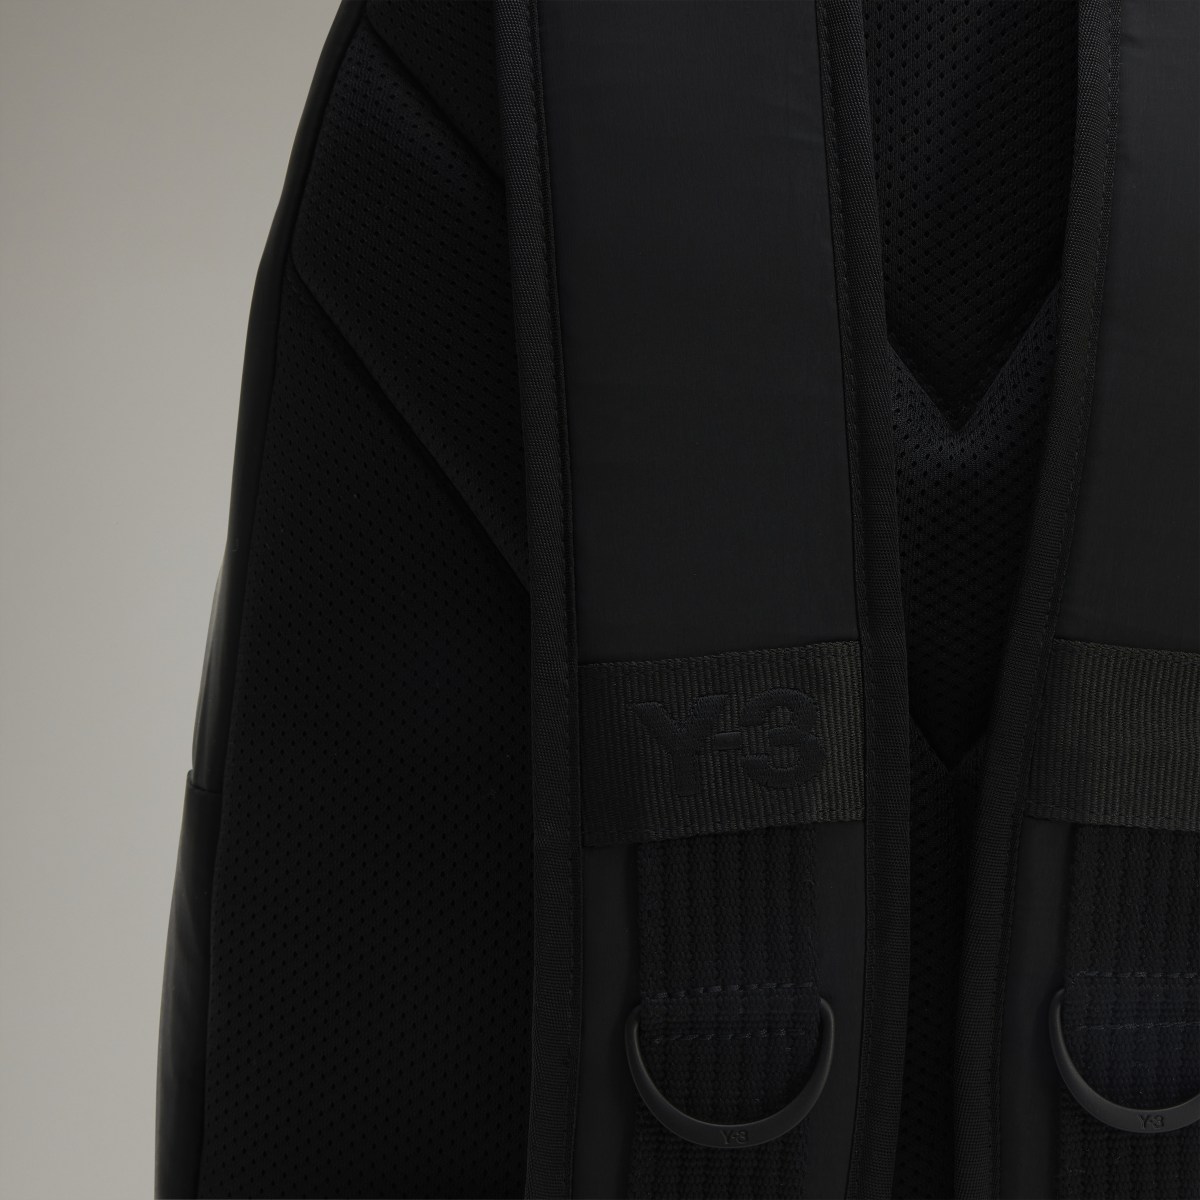 Adidas Y-3 Tech Backpack. 8